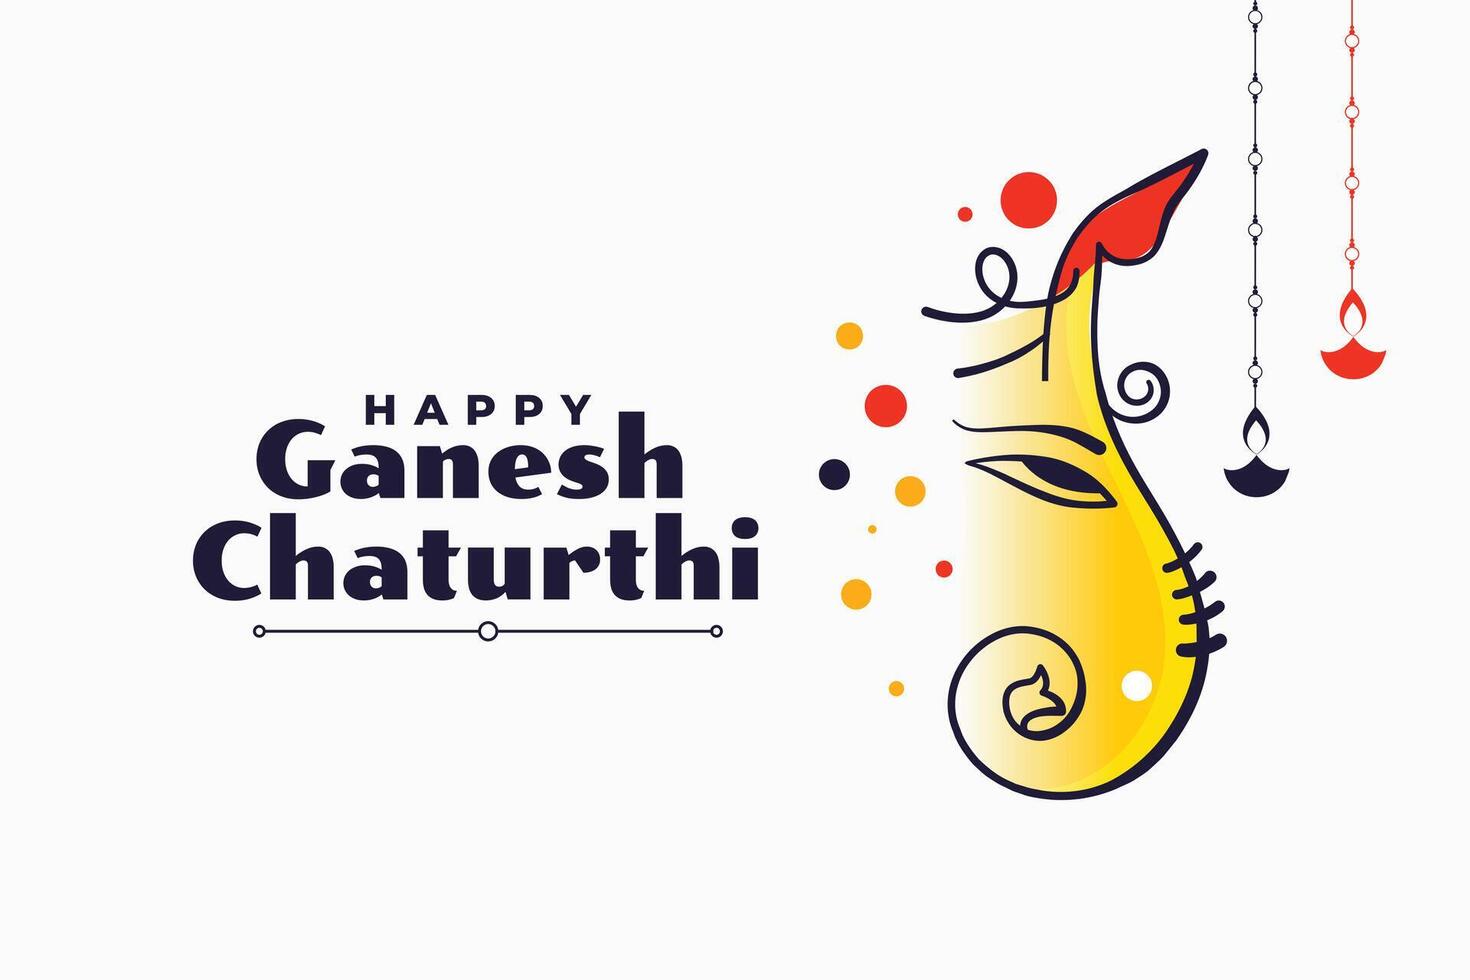 indian festival ganesh chaturthi celebration banner with ganesha design vector